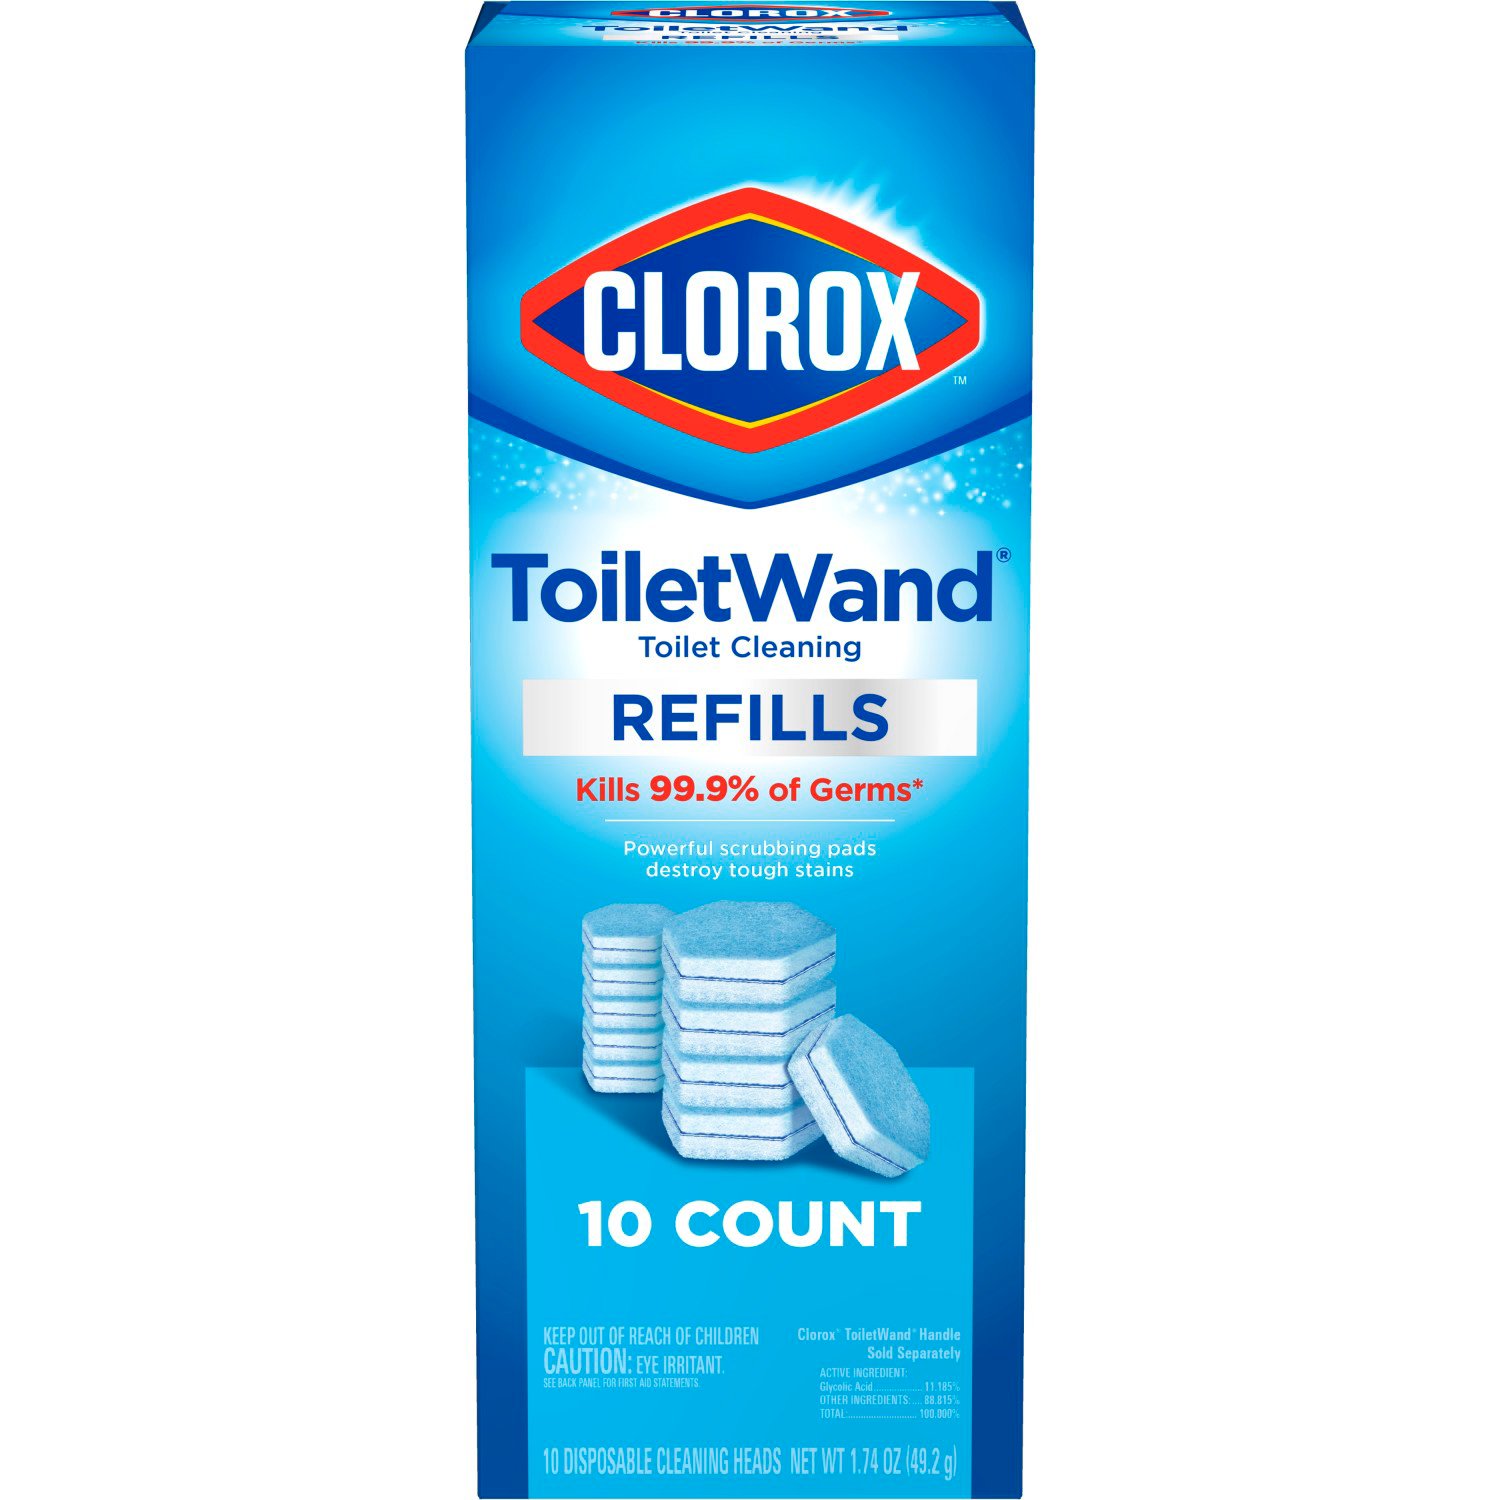 Clorox Toilet Wand Refills - Shop Brushes at H-E-B